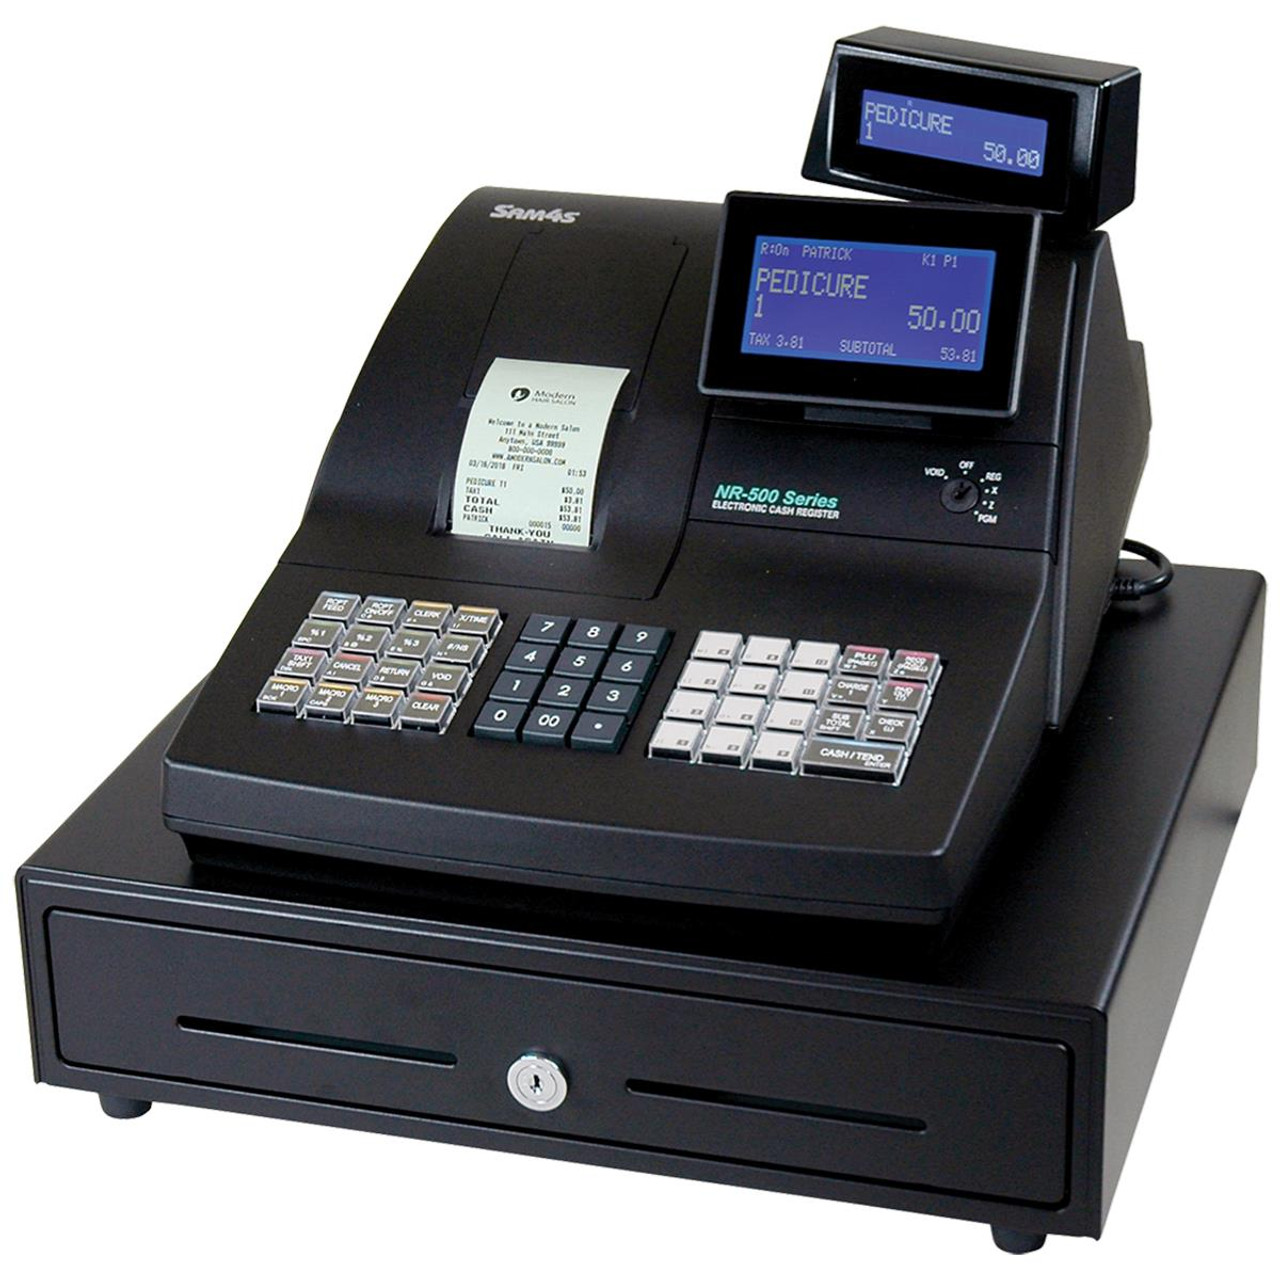 SAM4s NR-510 Retail Cash Register